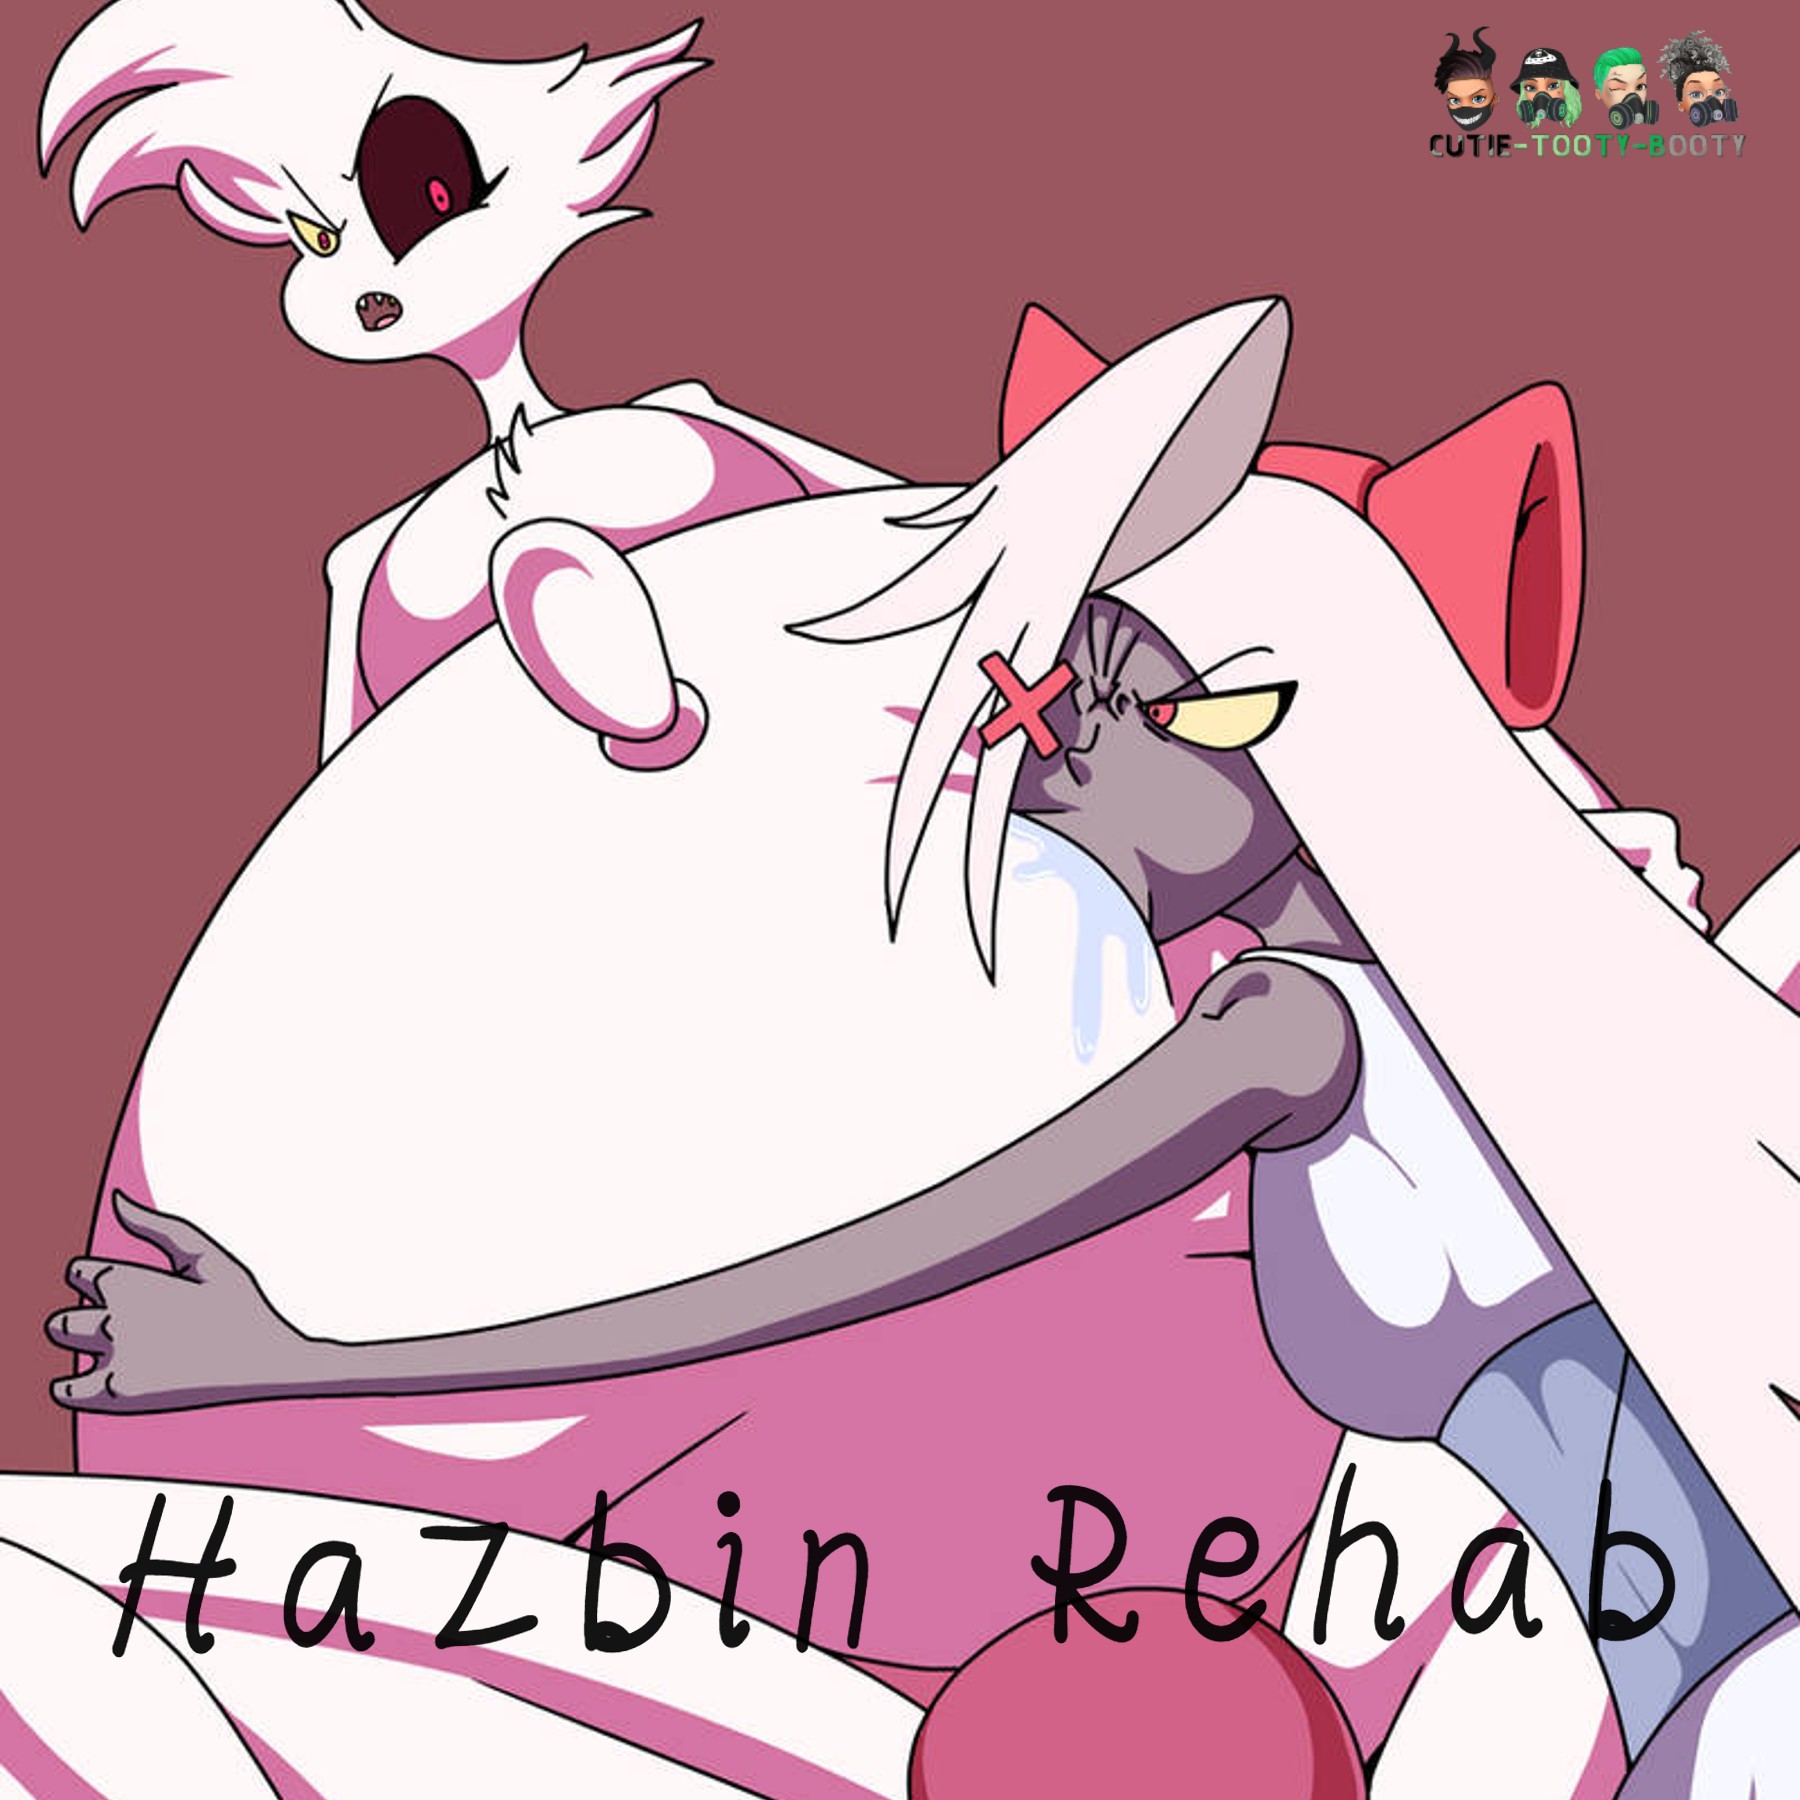 Hazbin Rehab